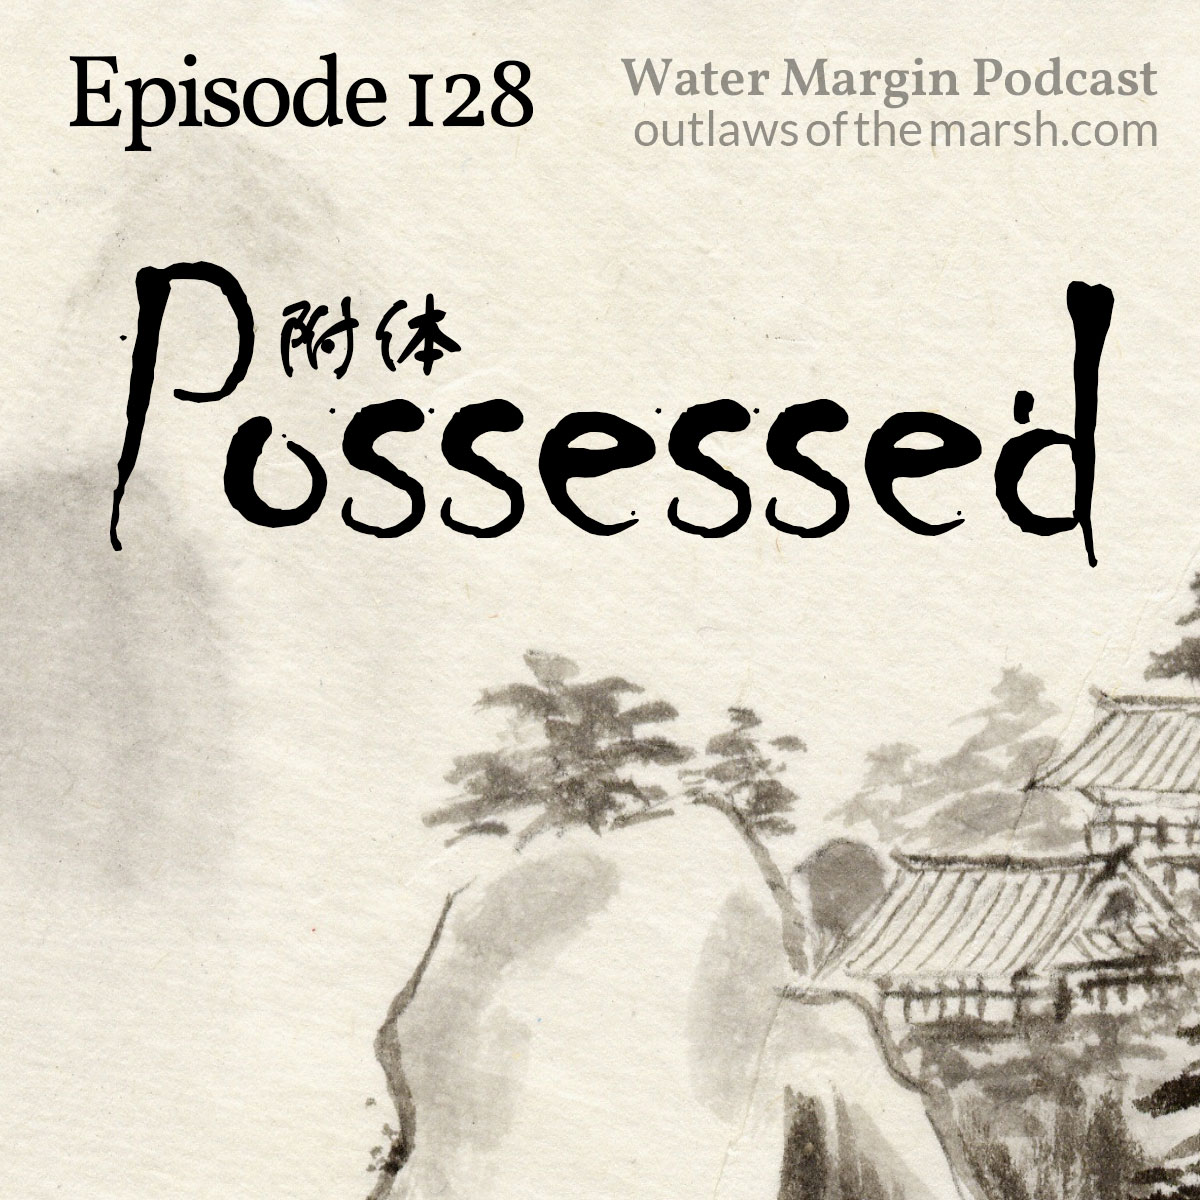 Water Margin Podcast: Episode 128